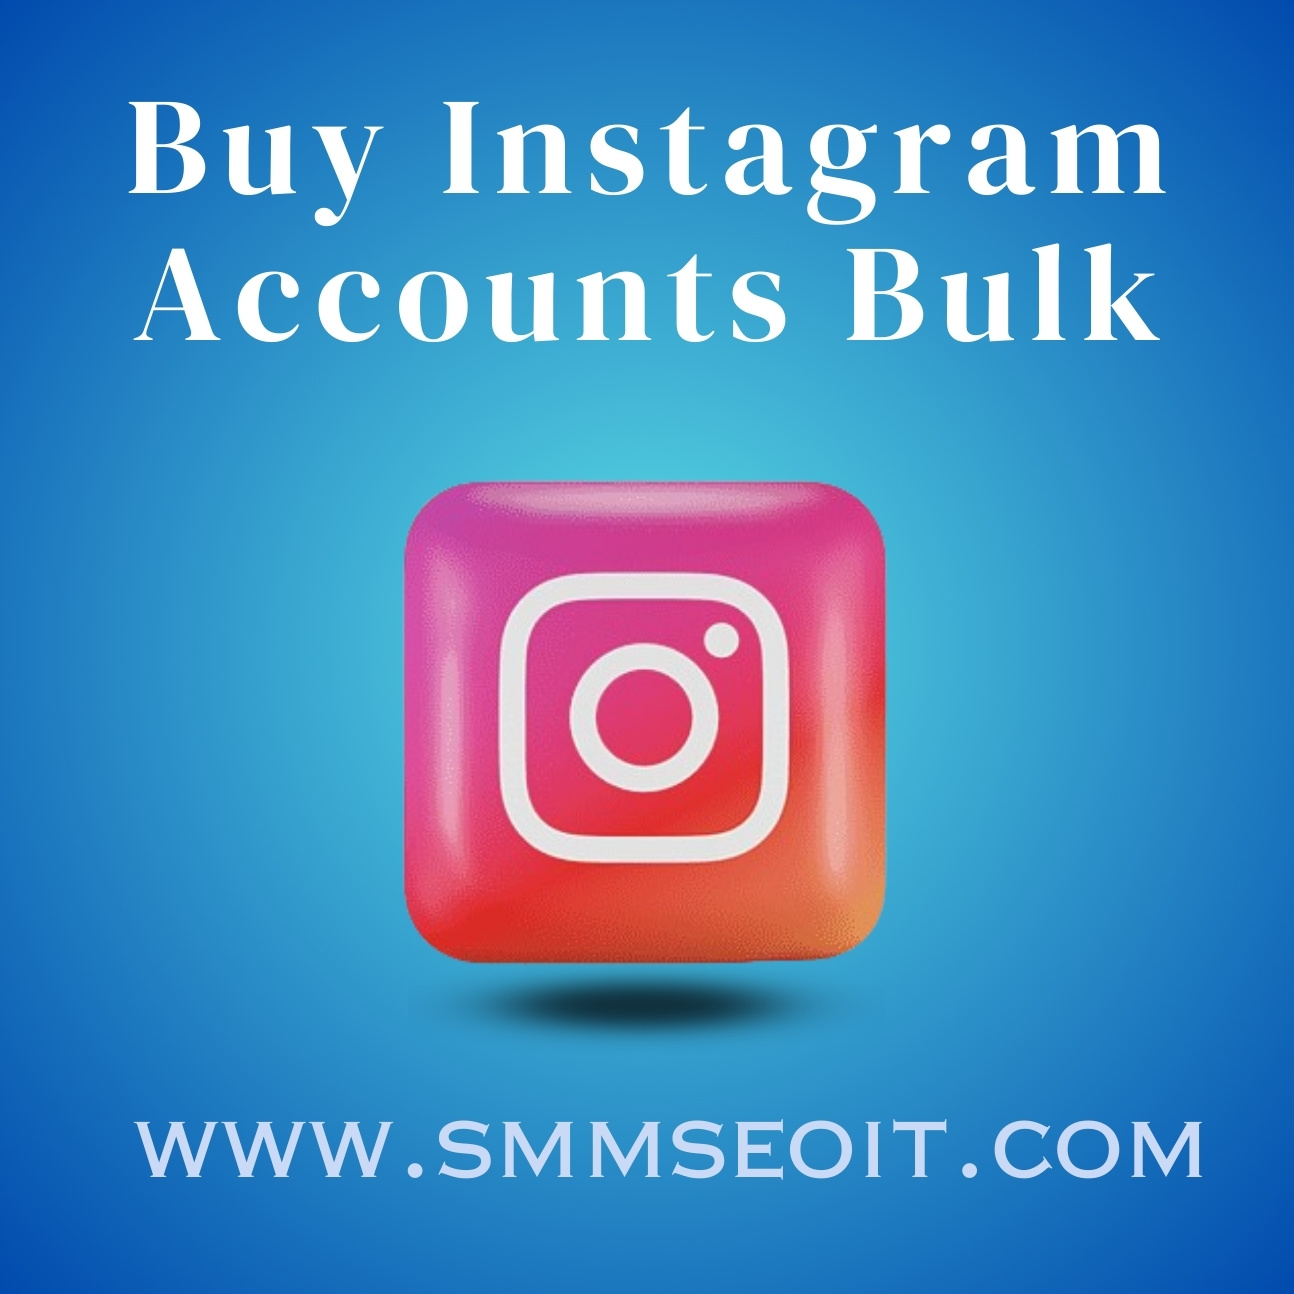 Buy Instagram Accounts Bulk - Buy Instagram Accounts (PVA)